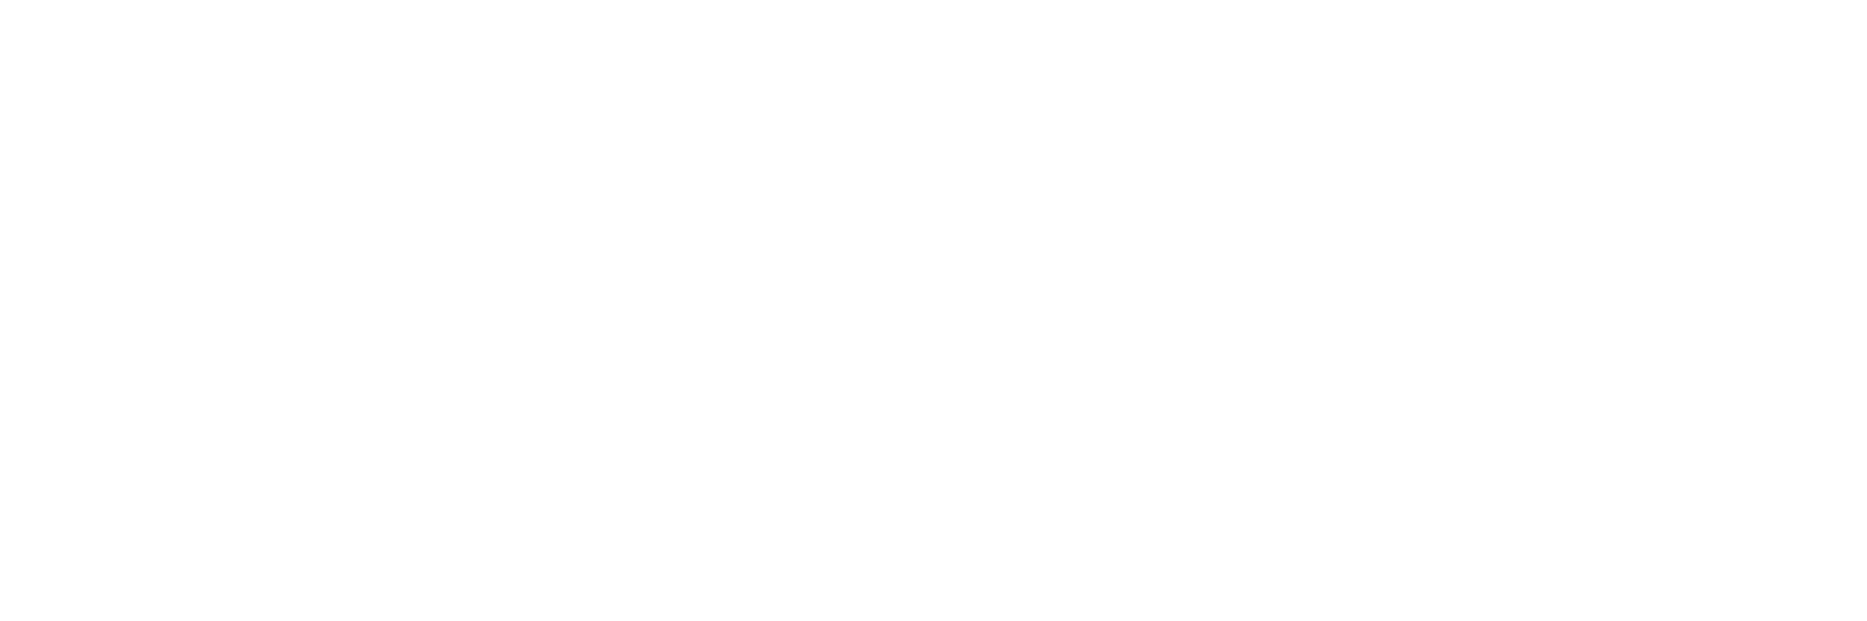 Clinically Portal